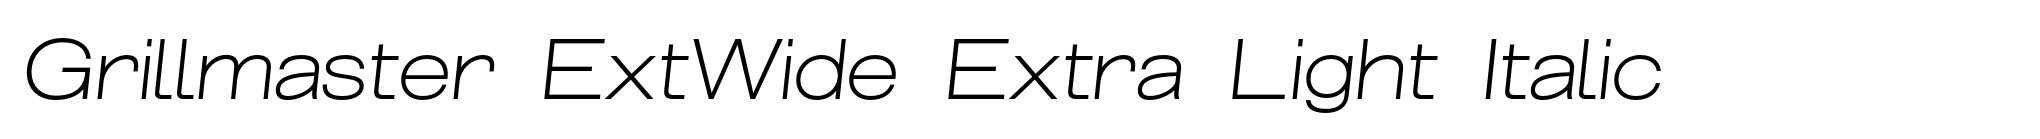 Grillmaster ExtWide Extra Light Italic image